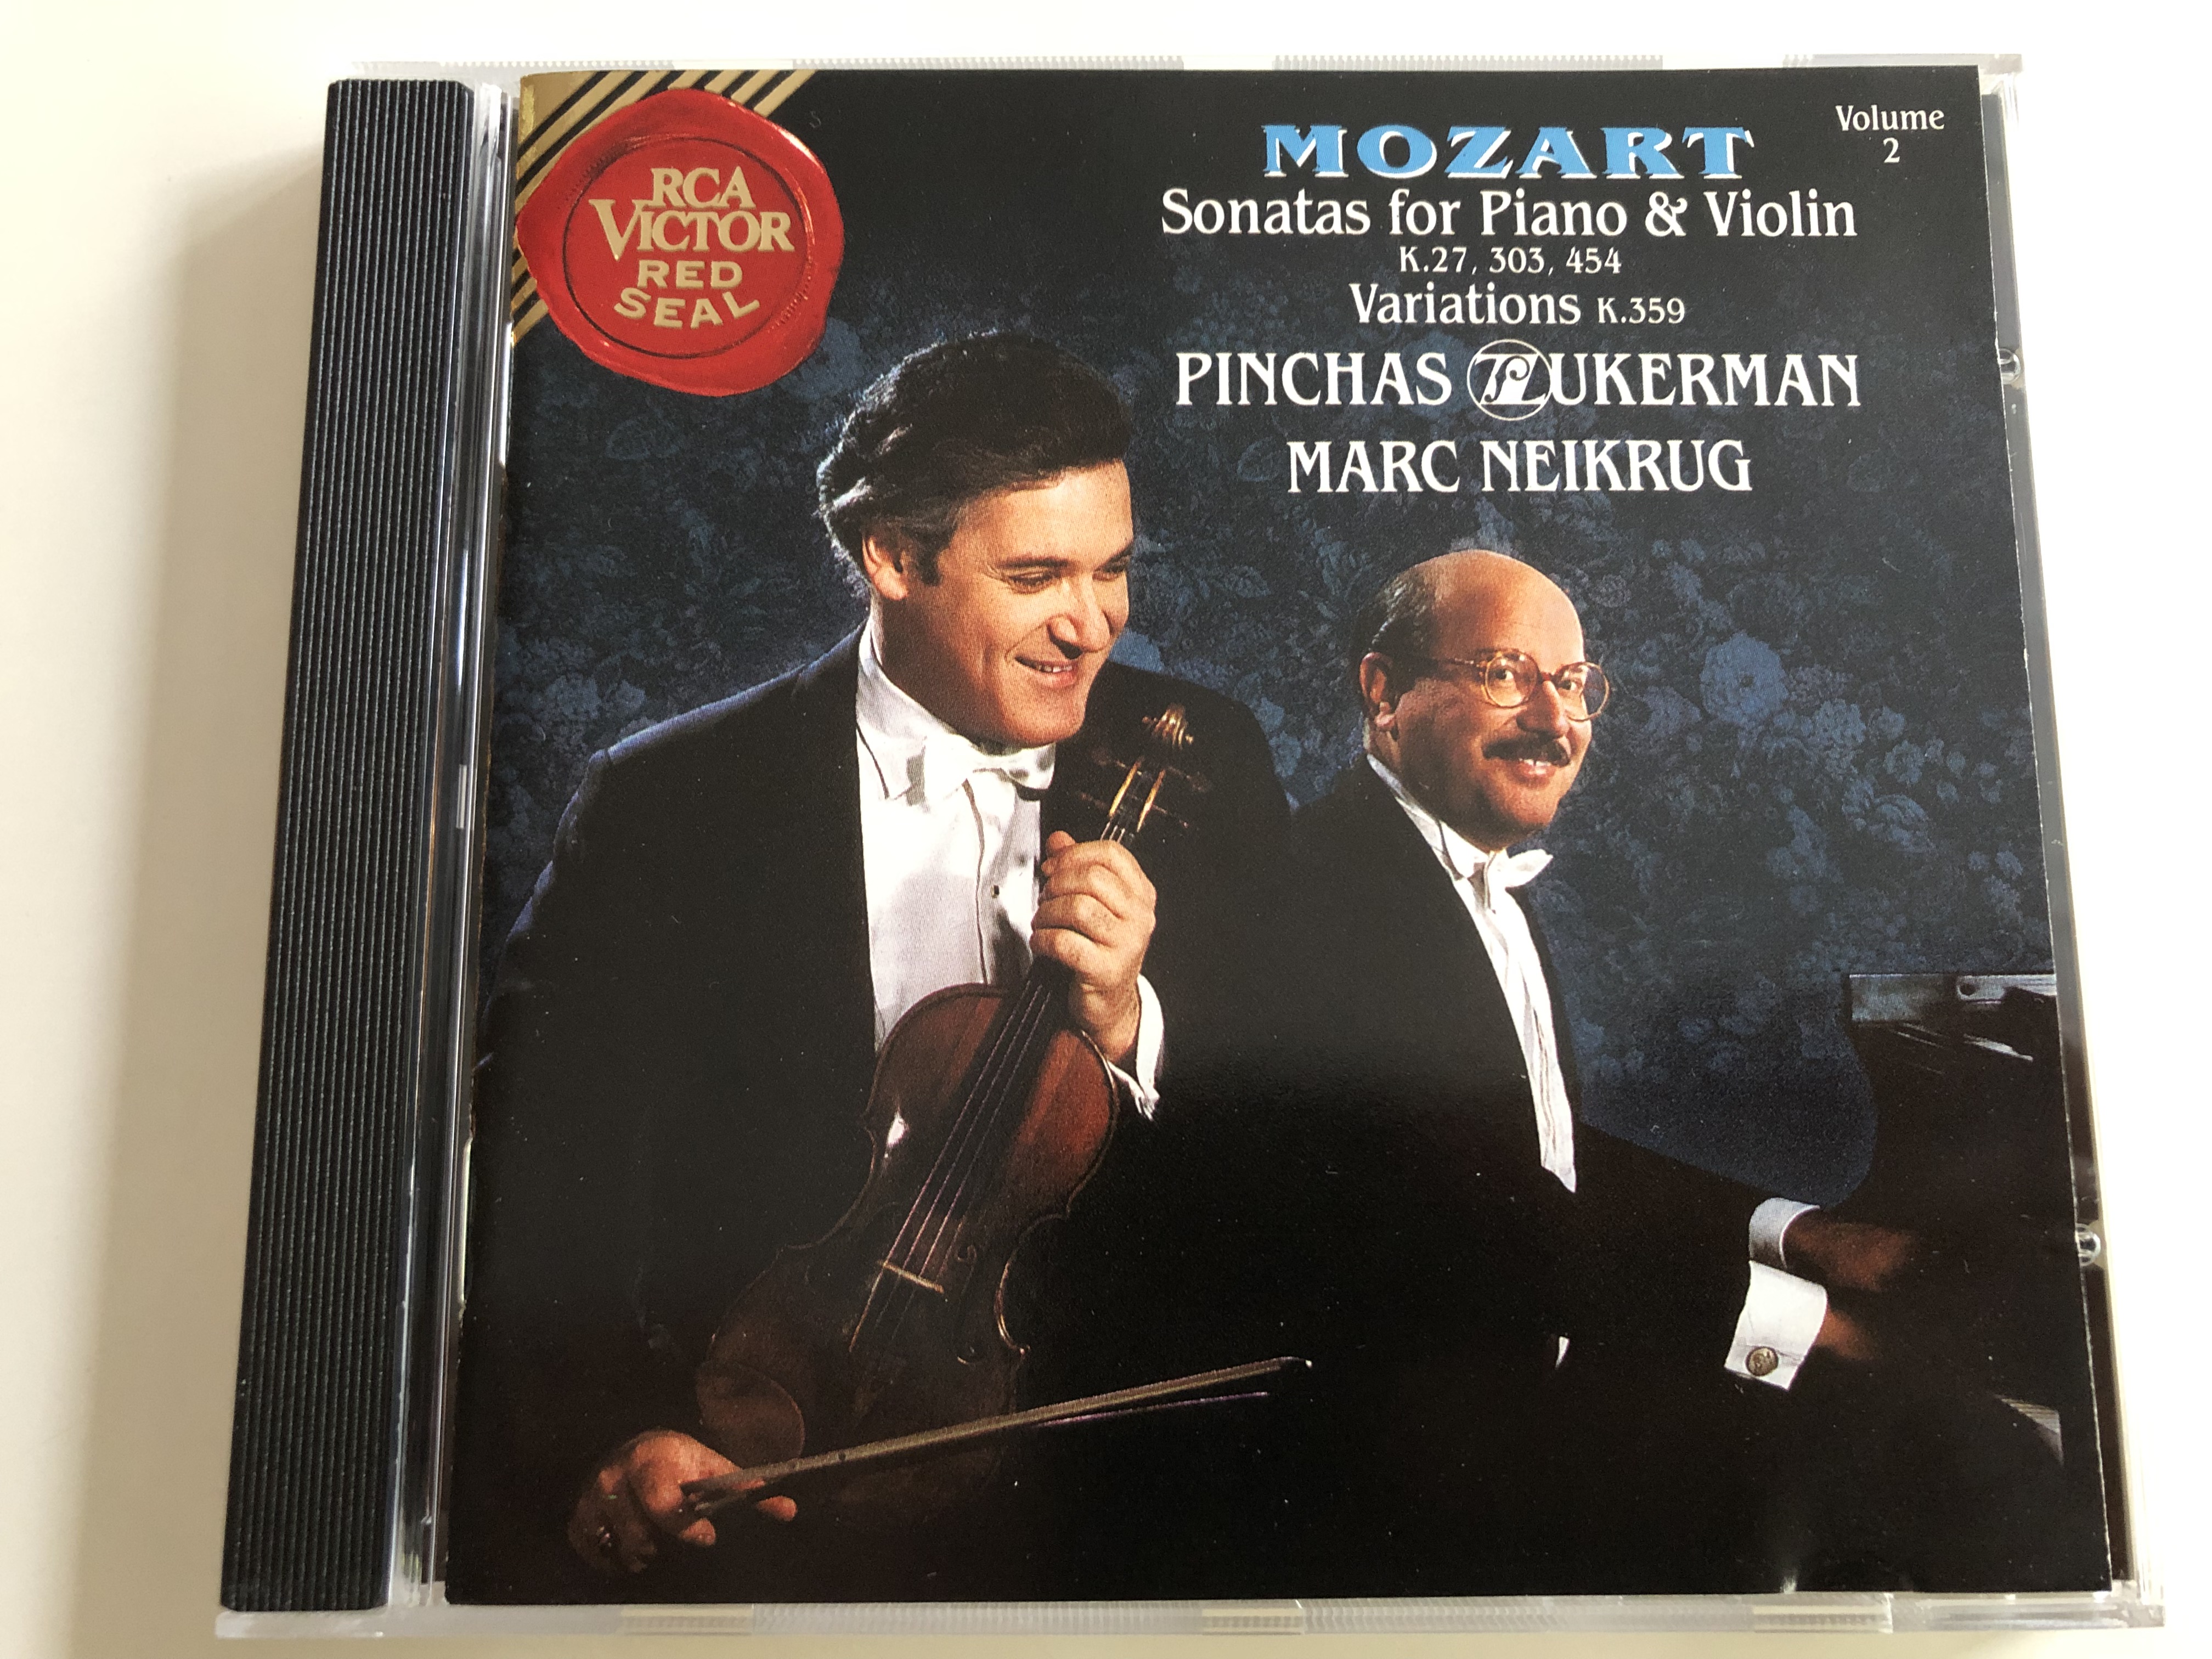 mozart-sonatas-for-piano-violin-k.27-303-454-variations-k.359-pinchas-zukerman-marc-neikrug-volume-2-rca-victor-red-seal-audio-cd-1991-rd60740-1-.jpg